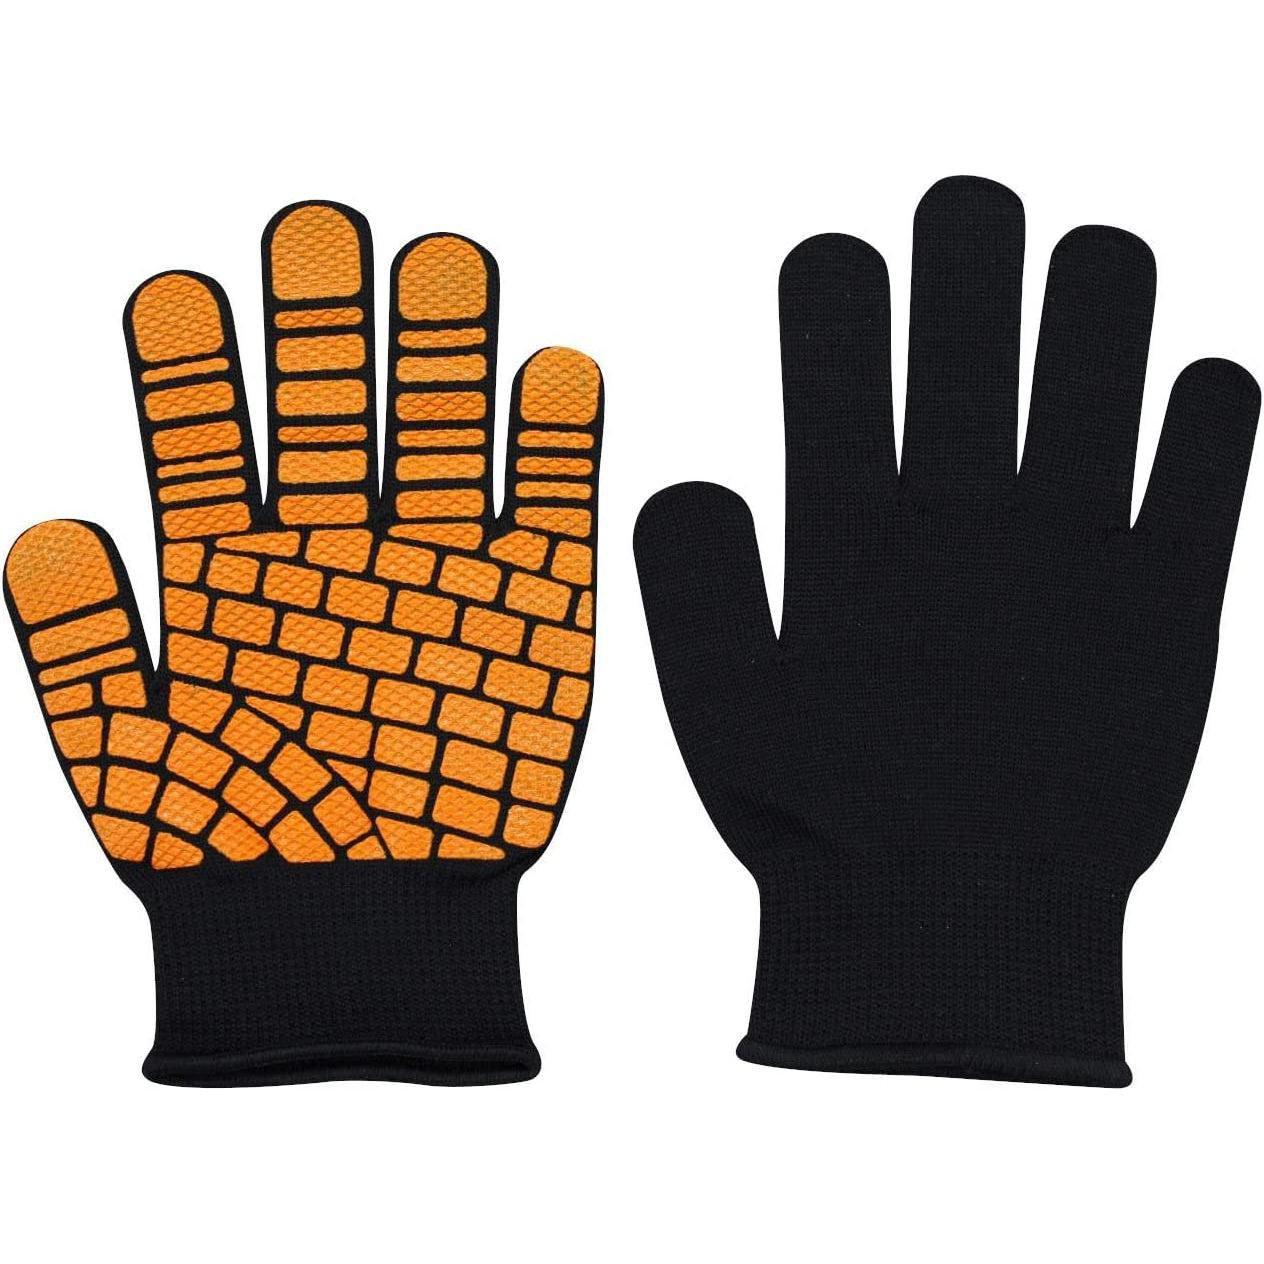 Atom Extra Durable Non-Slip Work Gloves 157 – Daitool